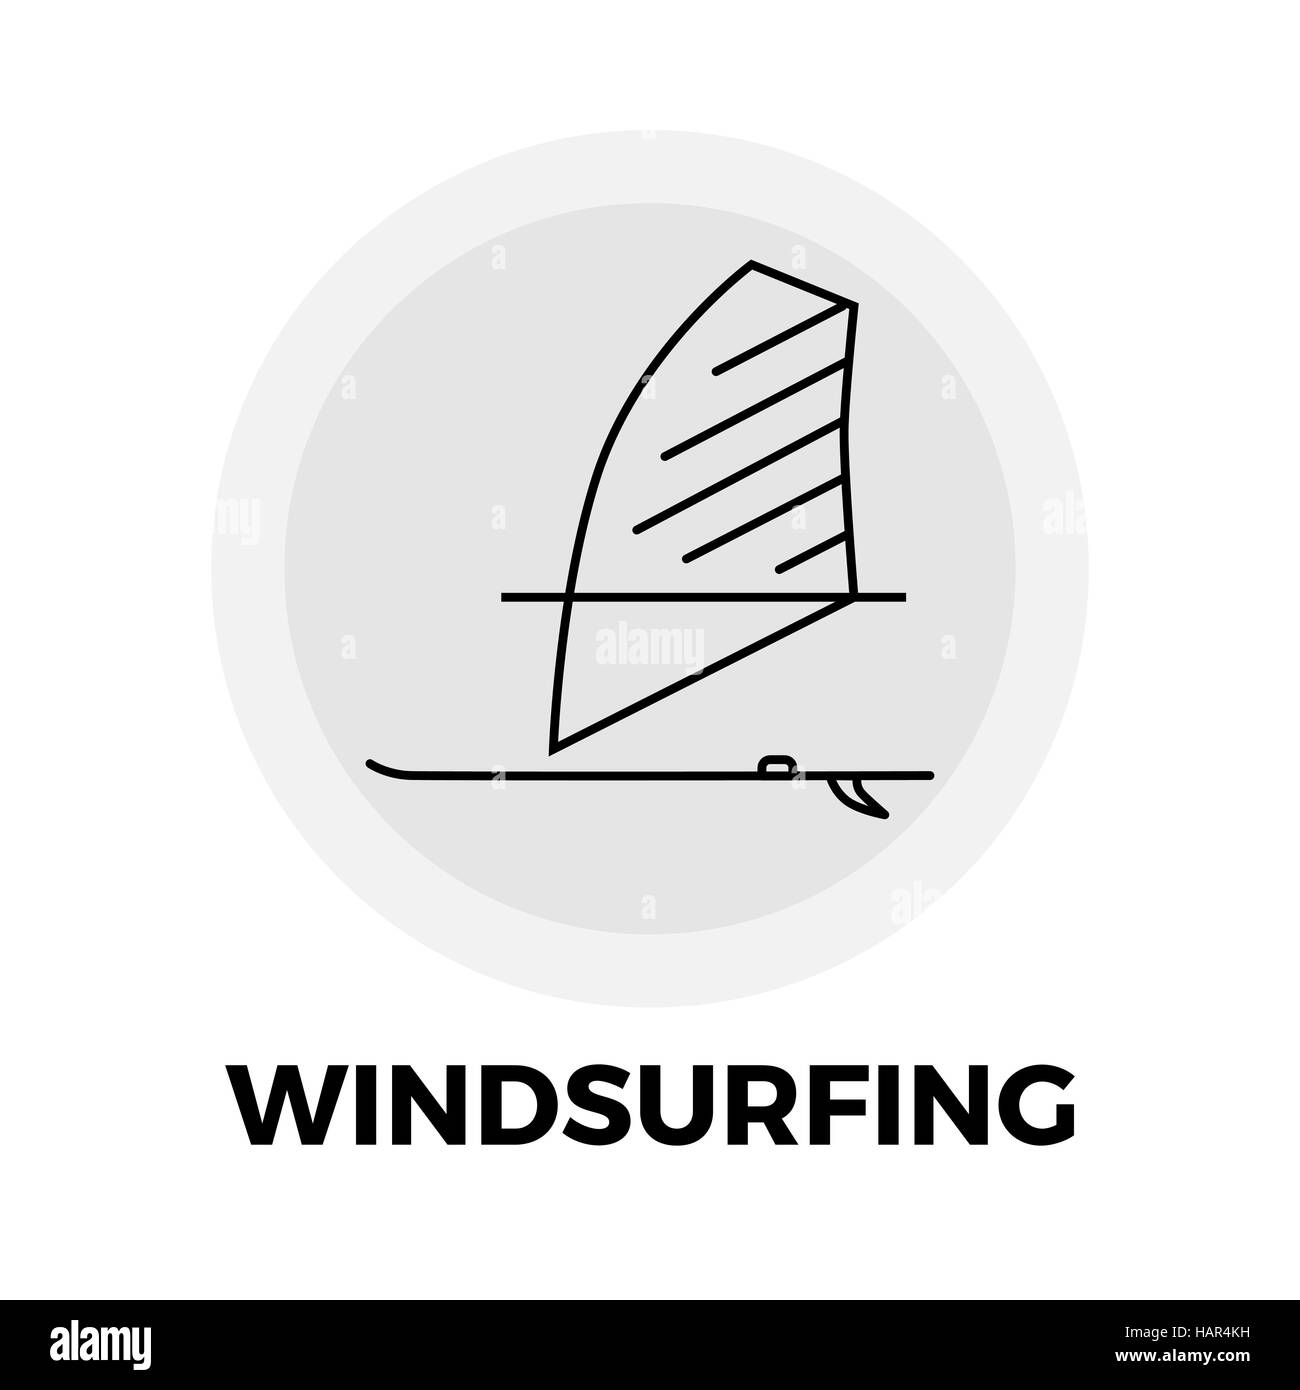 Windsurfing Icon Vector. Windsurfing Icon Flat. Windsurfing Icon Image. Windsurfing Icon Object. Windsurfing Line icon. Windsurfing Icon Graphic. Wind Stock Vector